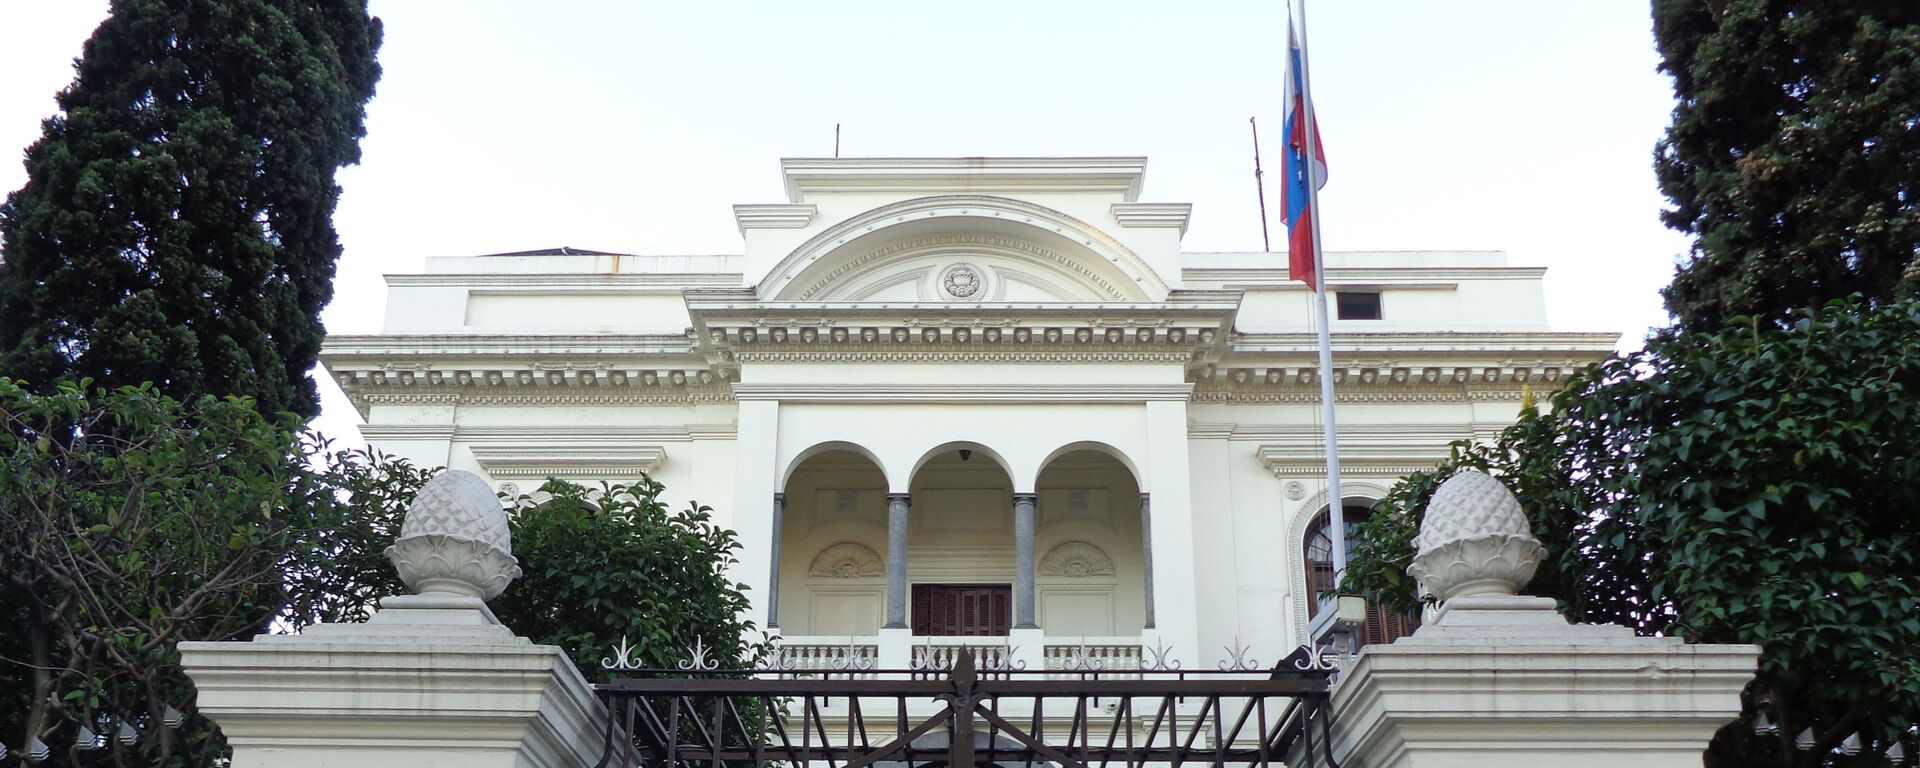 Embajada de Rusia en Uruguay - Sputnik Mundo, 1920, 09.02.2021